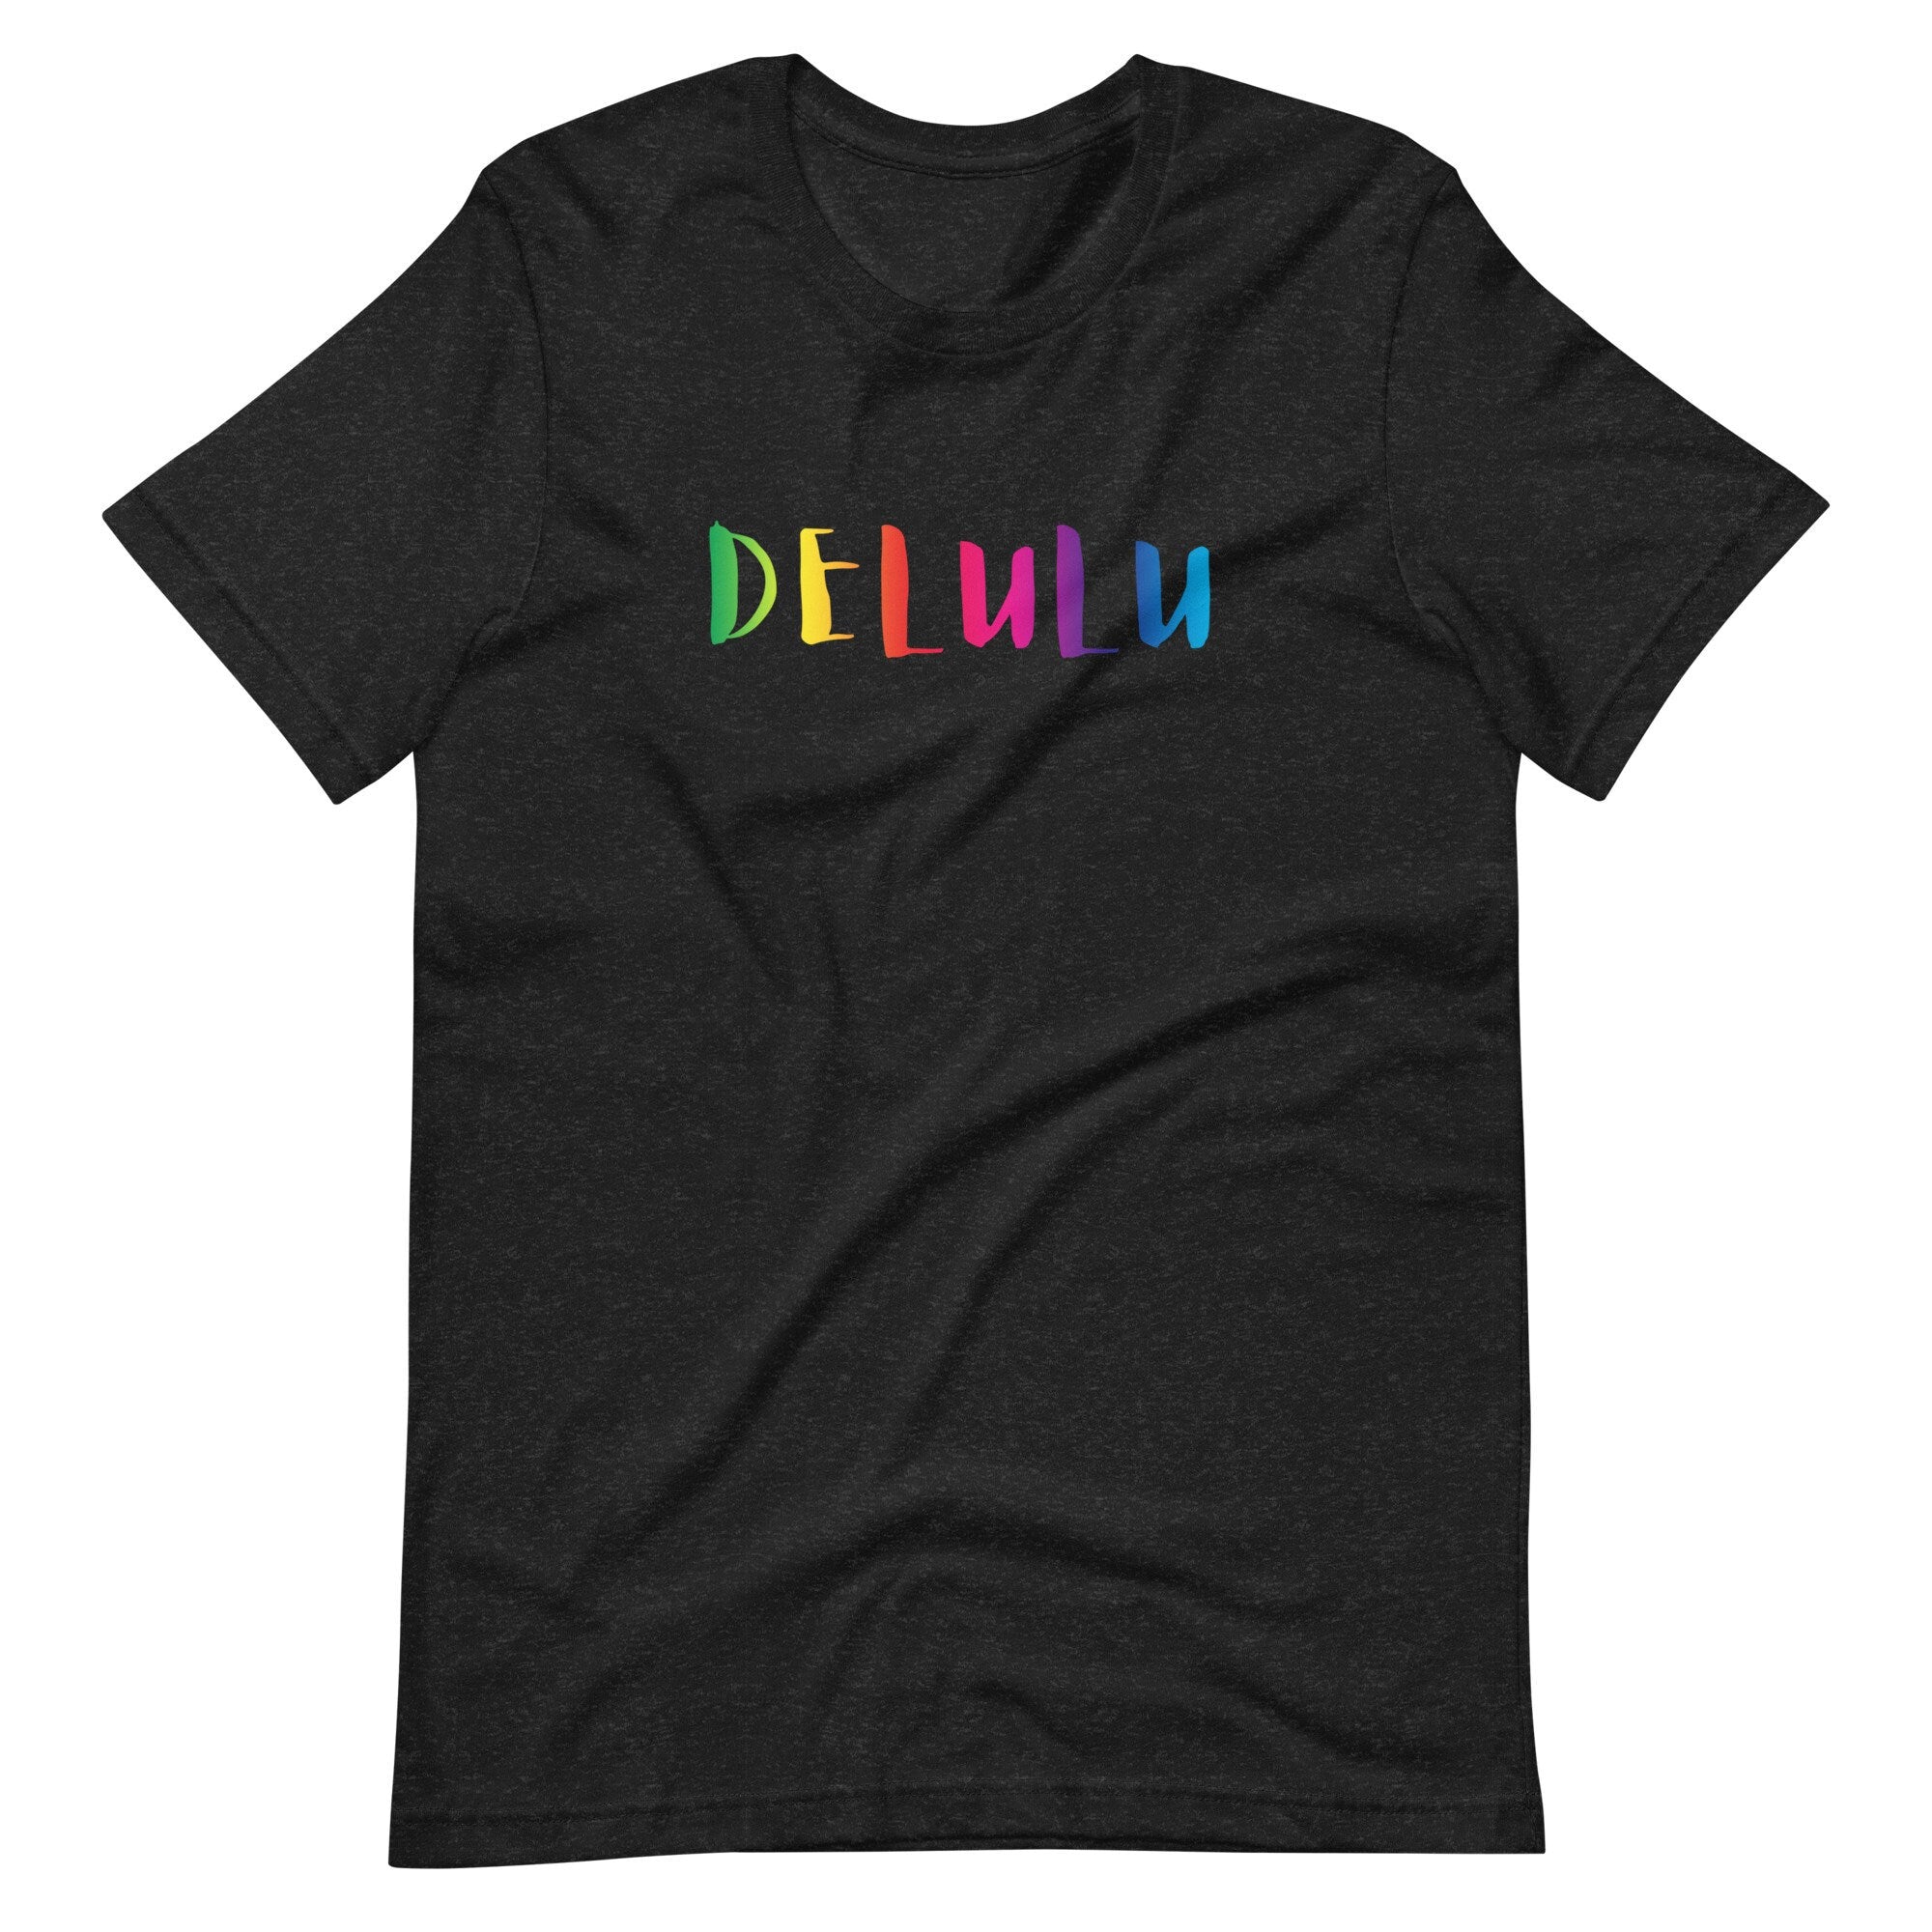 Rainbow Delulu Vibrant, Trending Phrase LGBTQ Meme Unisex t-shirt - ActivistChic